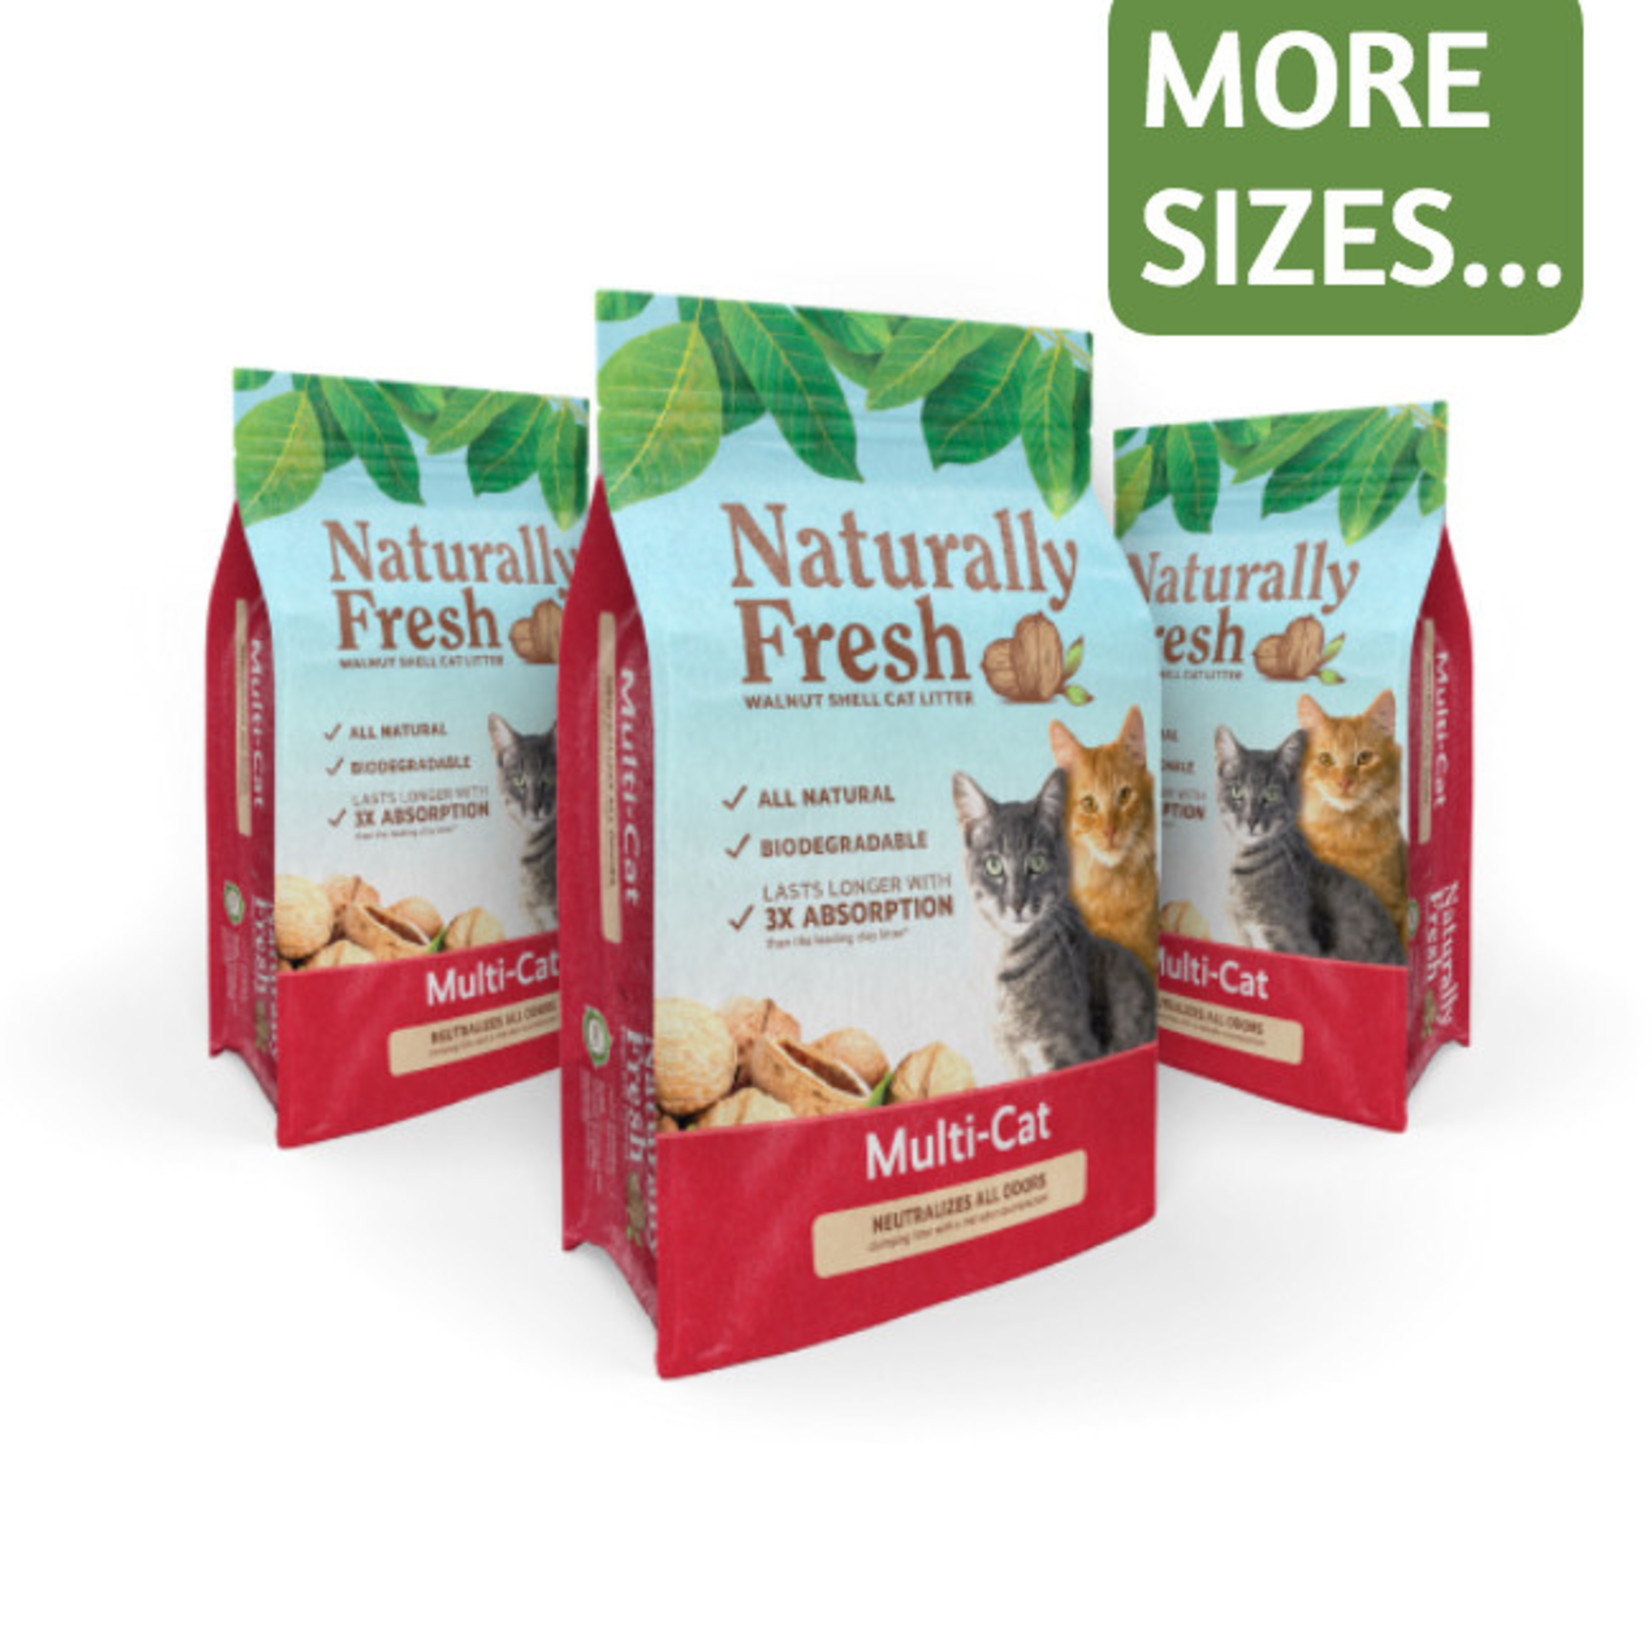 Eco-Shell Naturally Fresh Walnut Based Multi Cat Clumping Litter